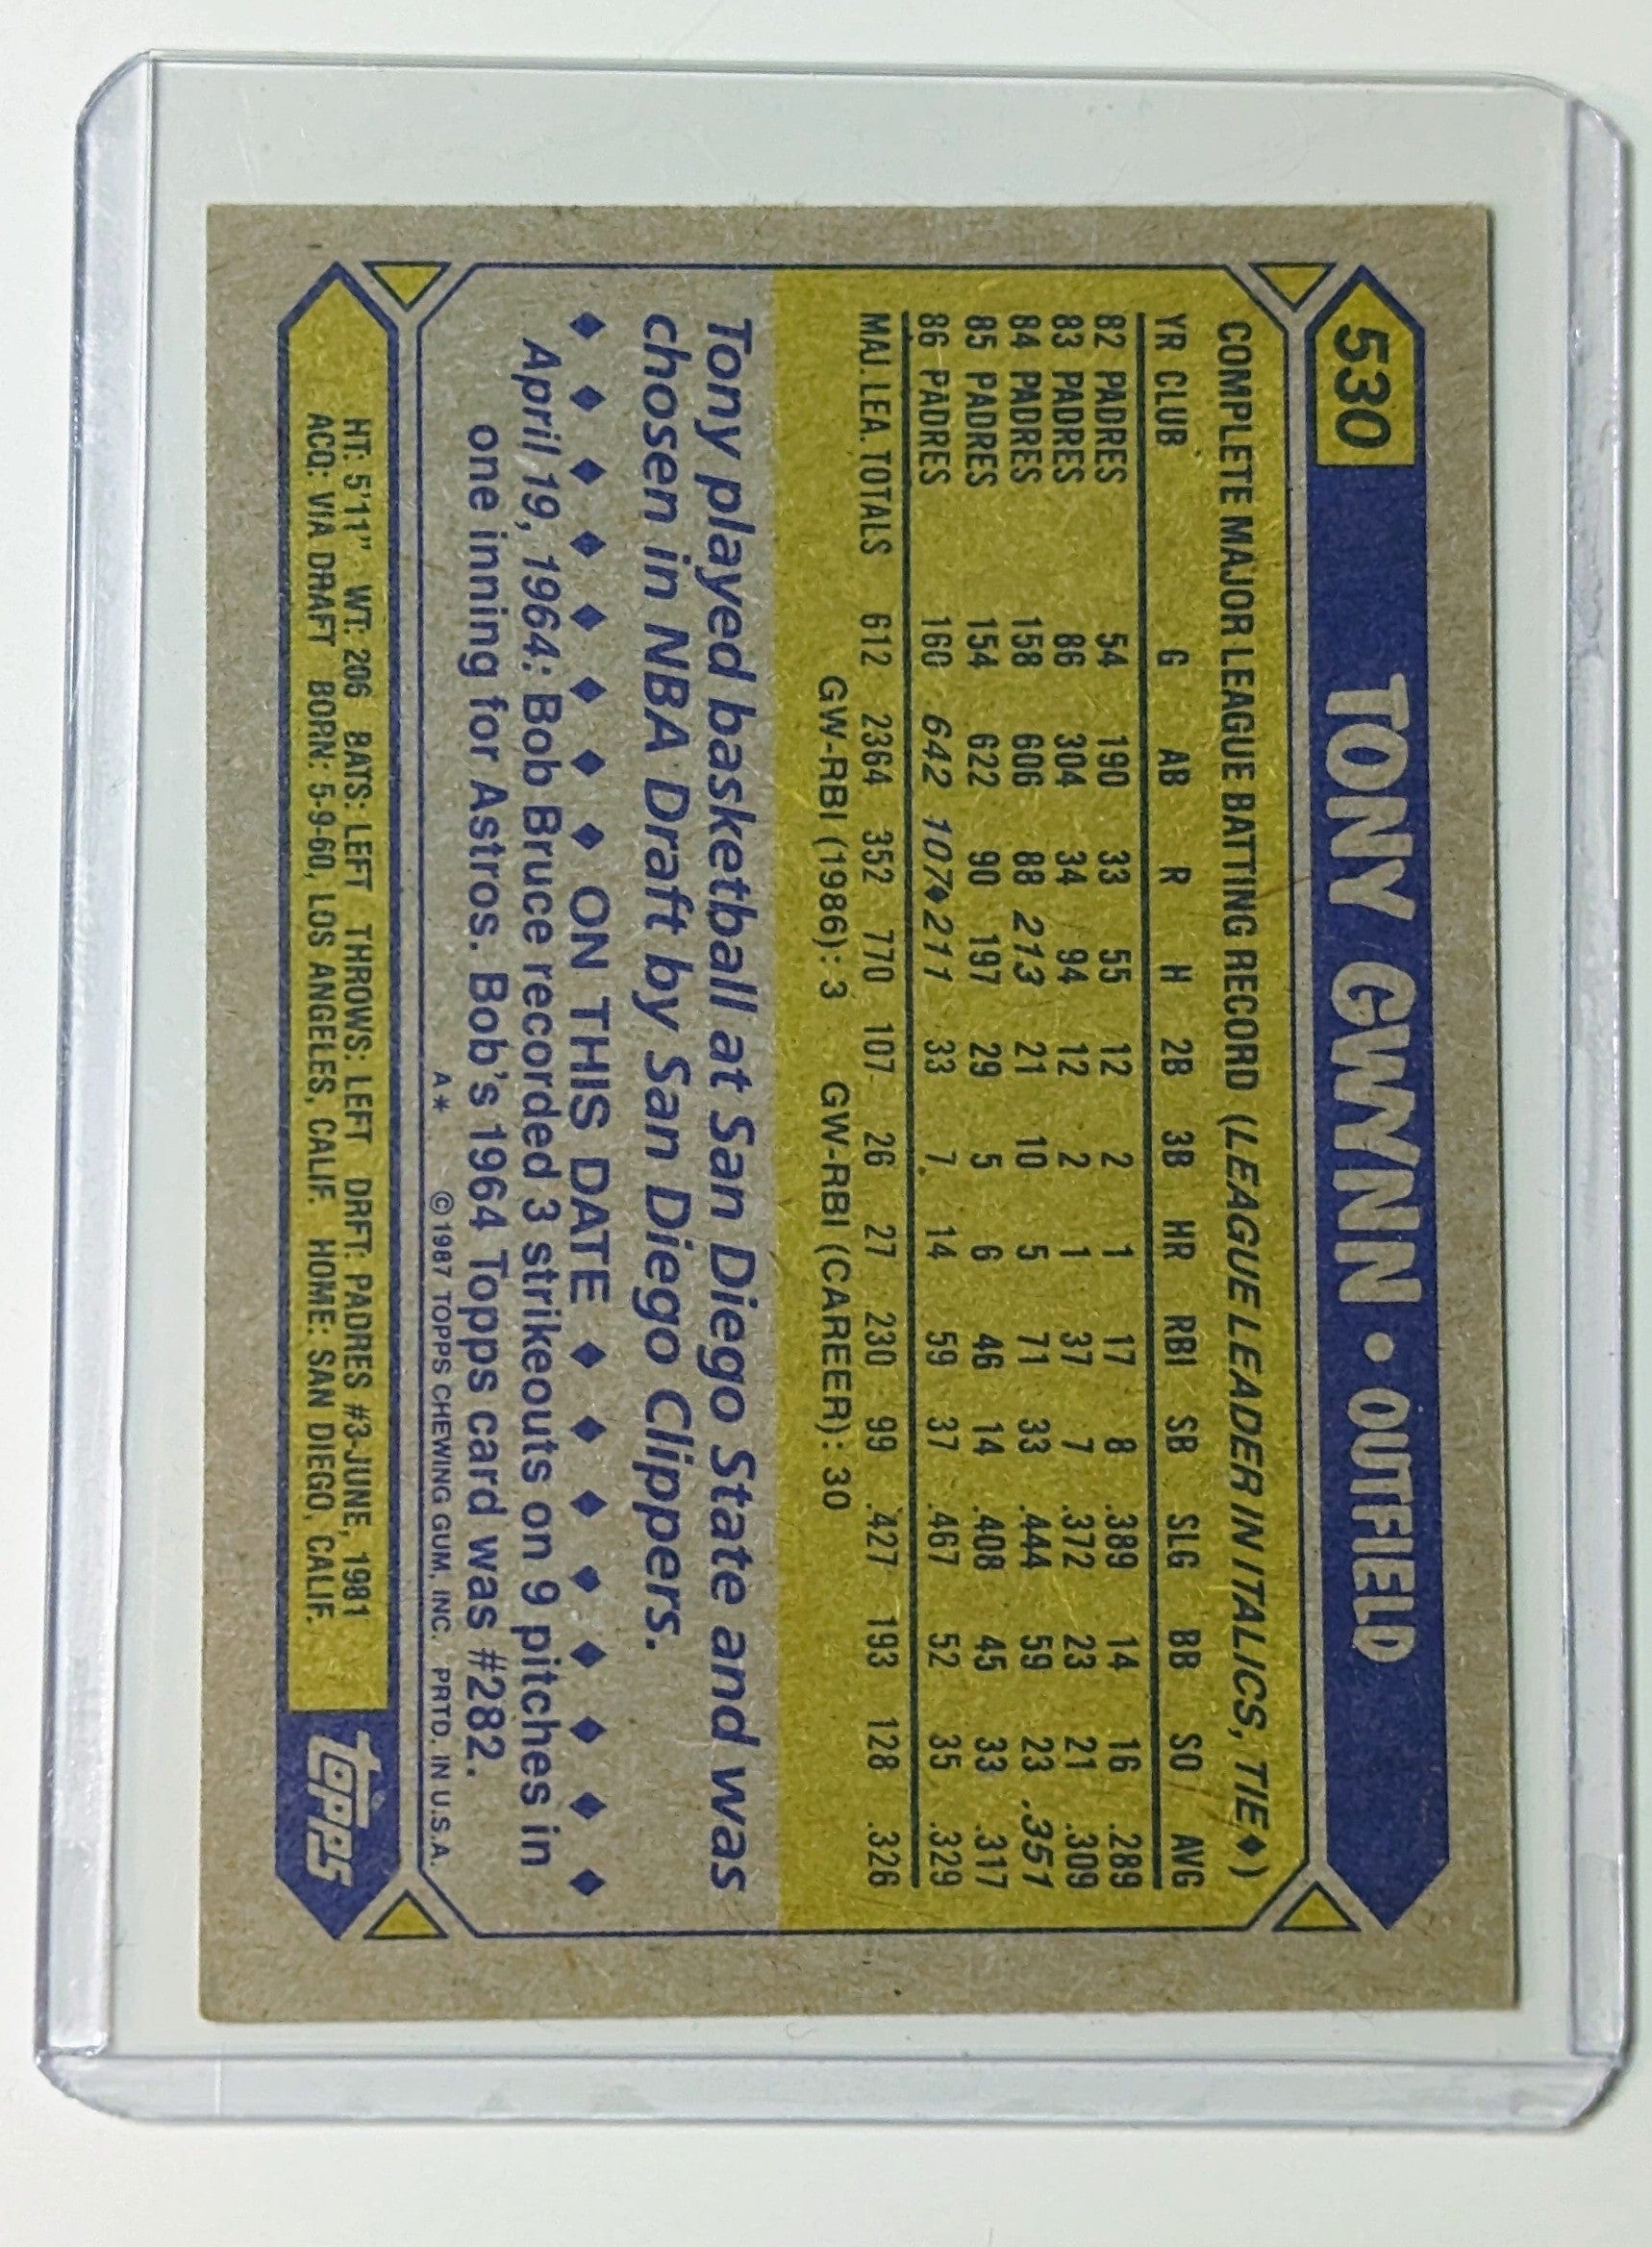 FIINR Baseball Card 1987 Topps Tony Gwynn Baseball Card #530 - Mint Condition